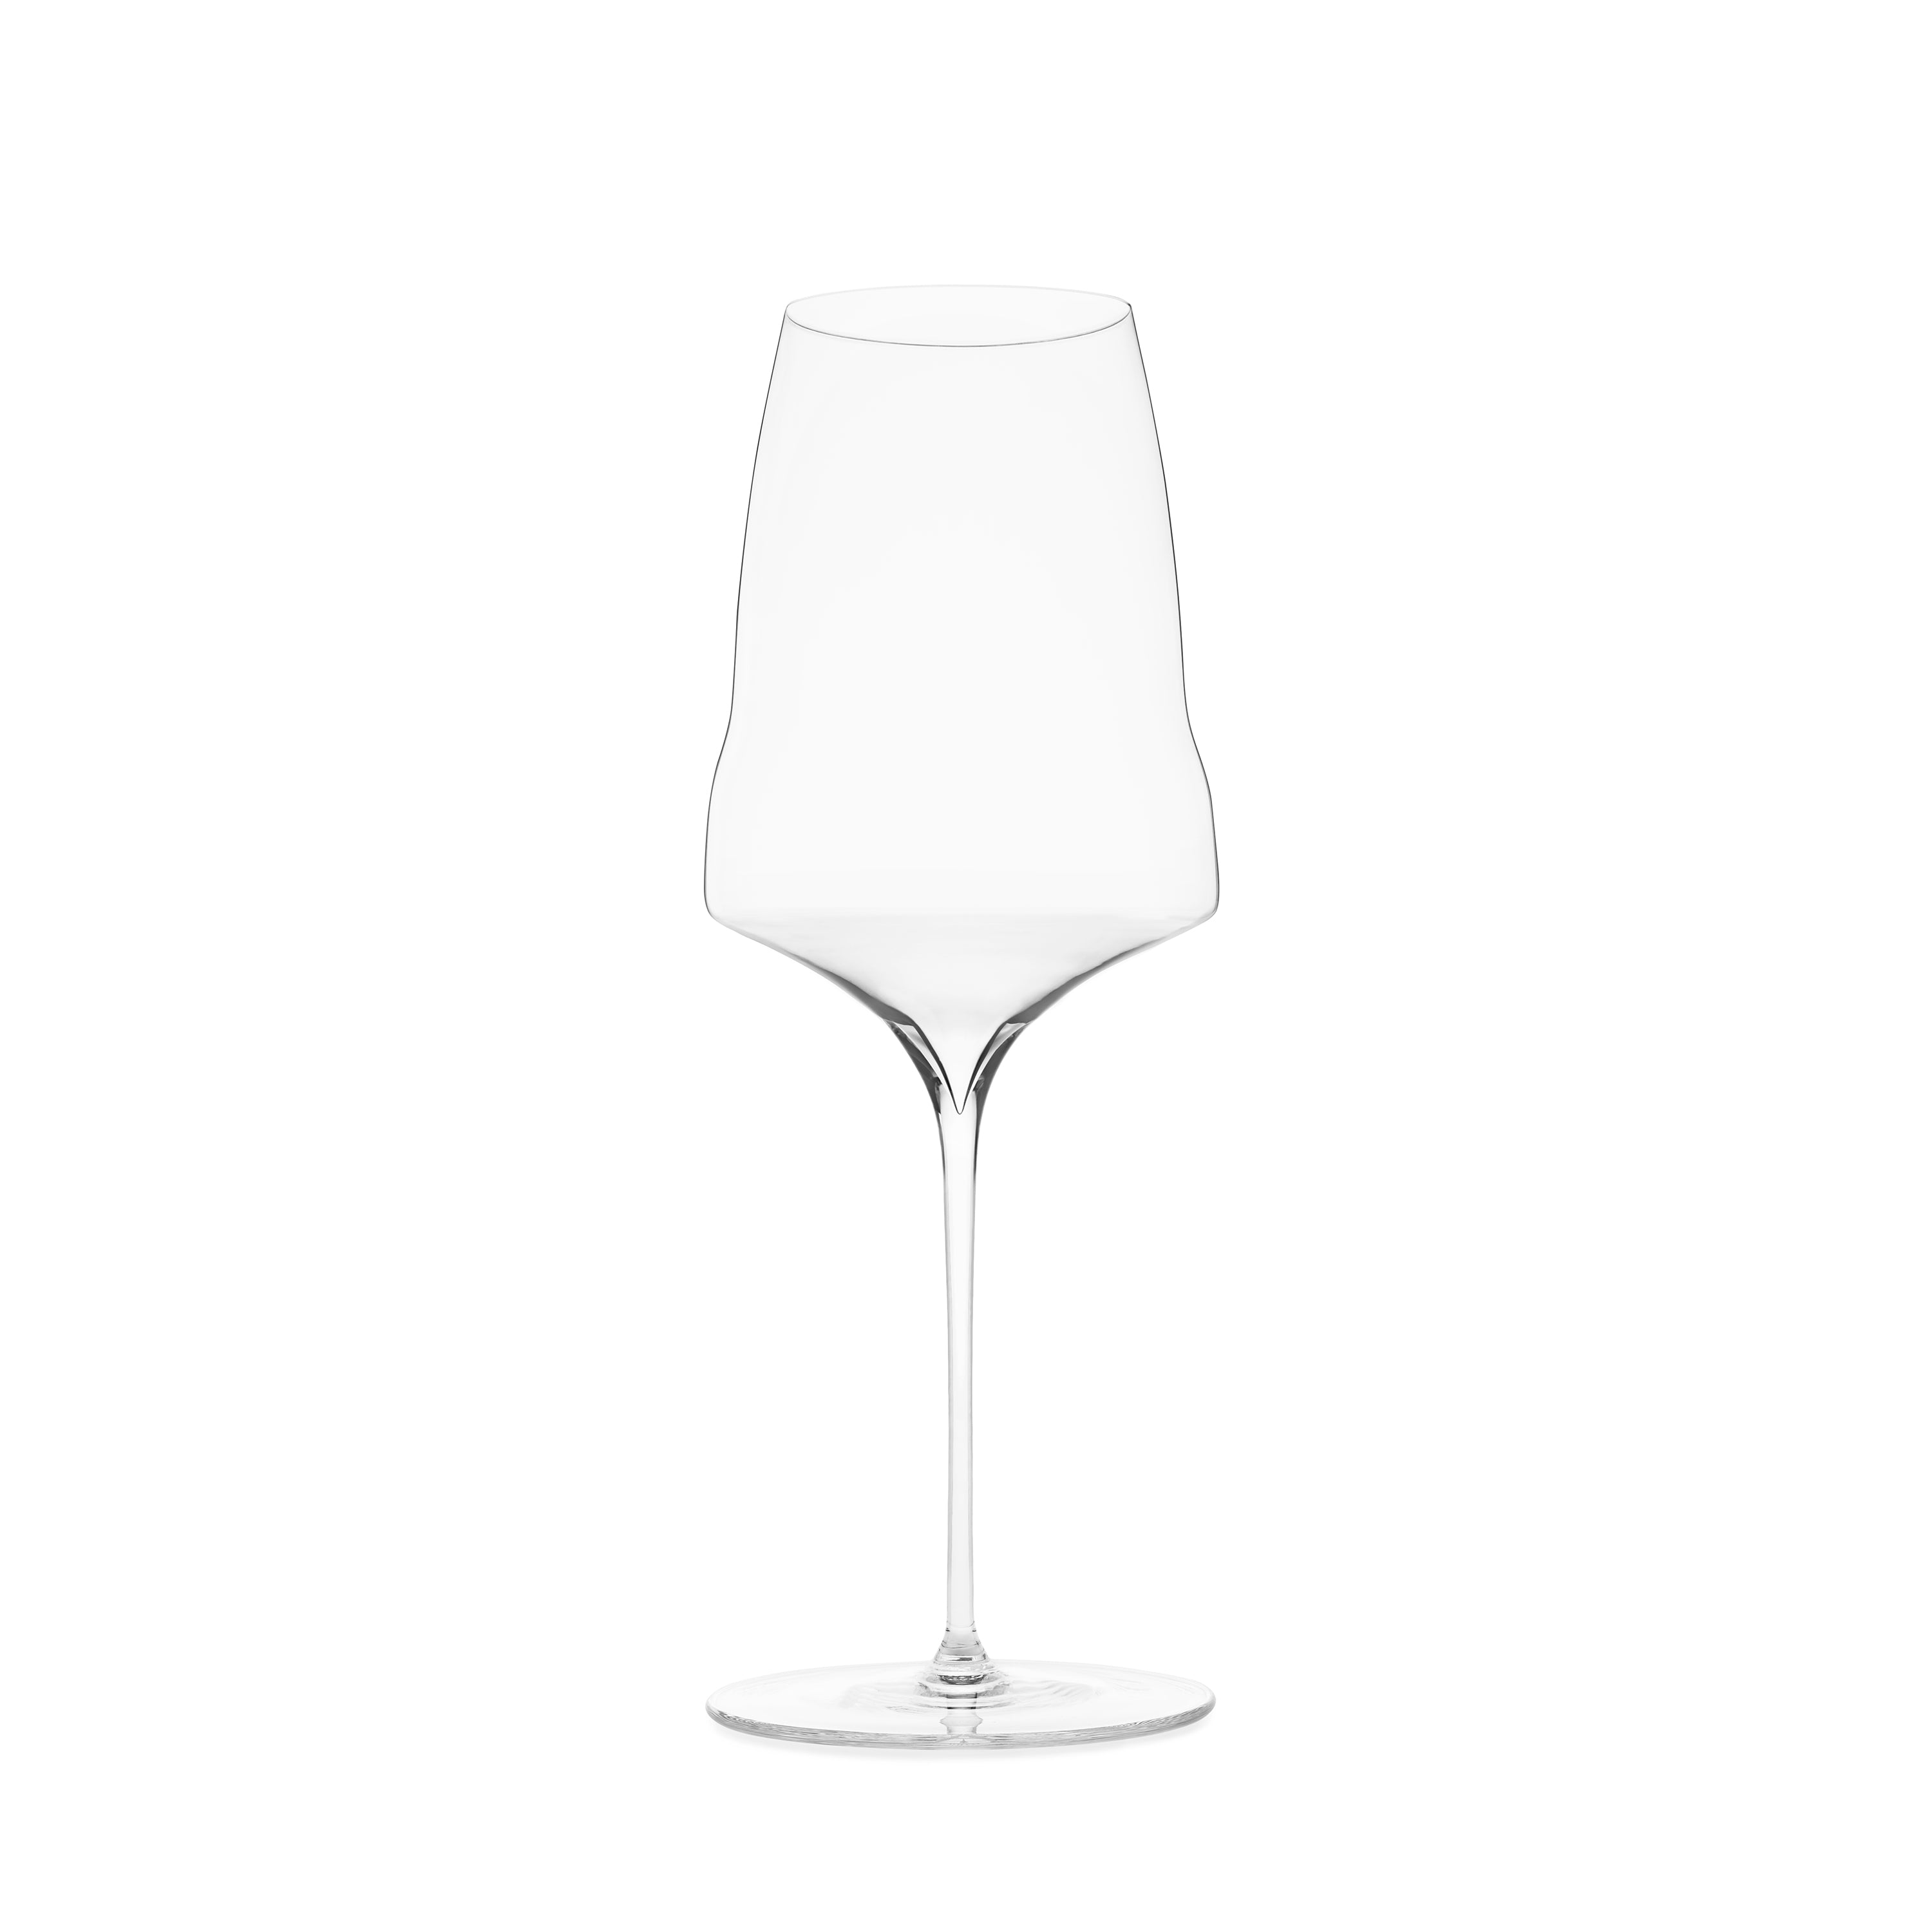 JOSEPHINE No 2 by Josephinenhütte – Universal wine glass #Set_Single Glass